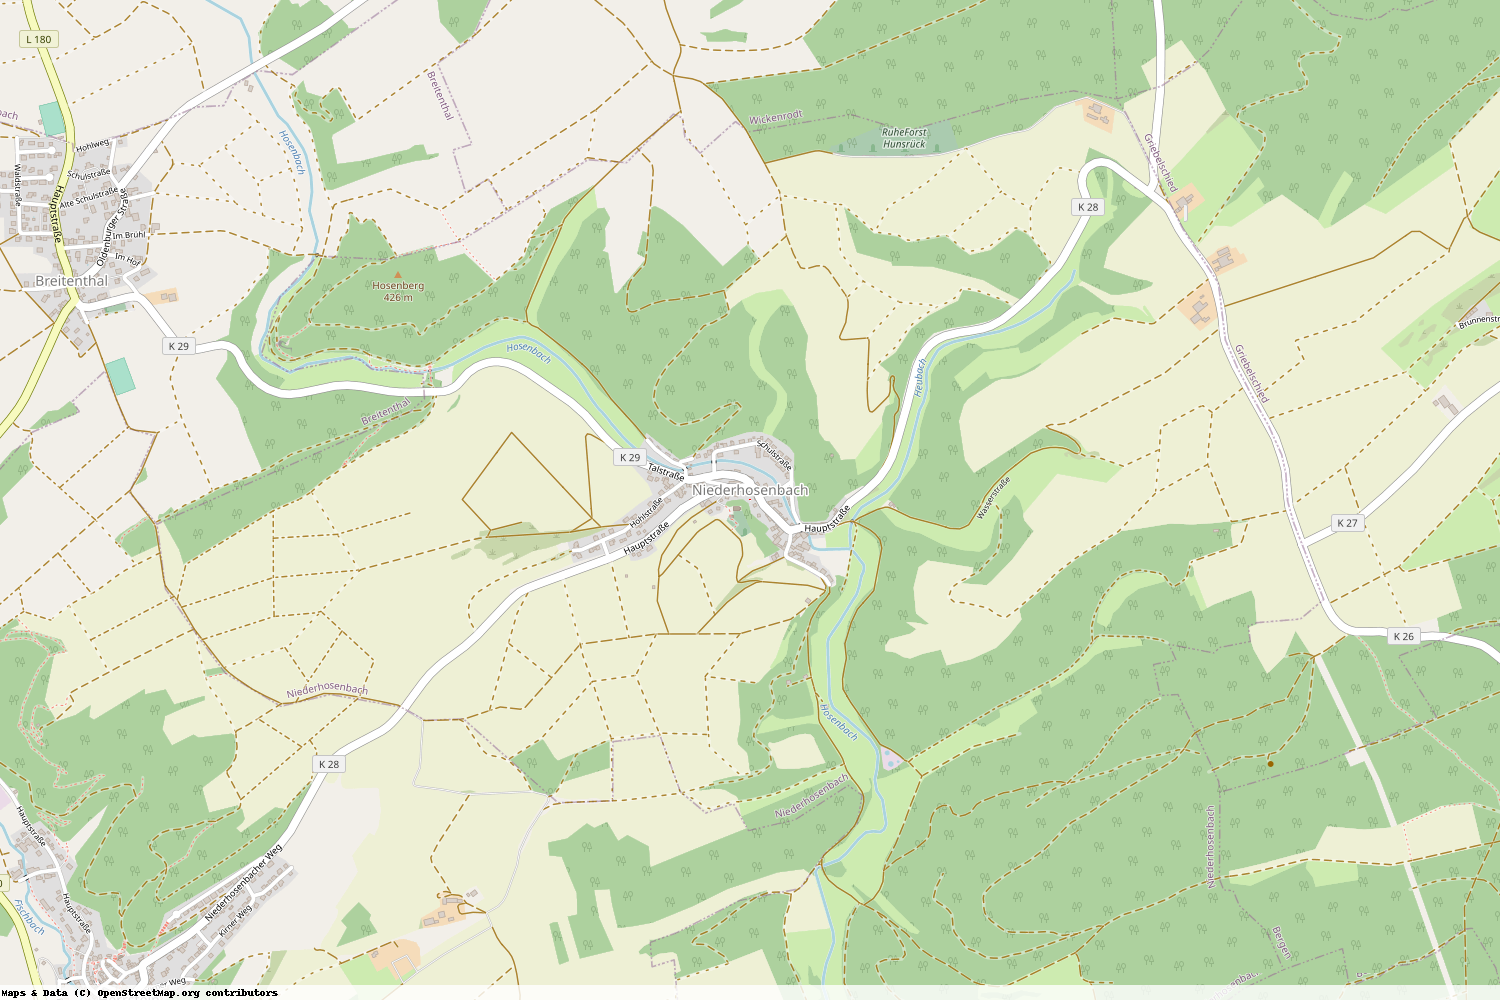 Ist gerade Stromausfall in Rheinland-Pfalz - Birkenfeld - Niederhosenbach?